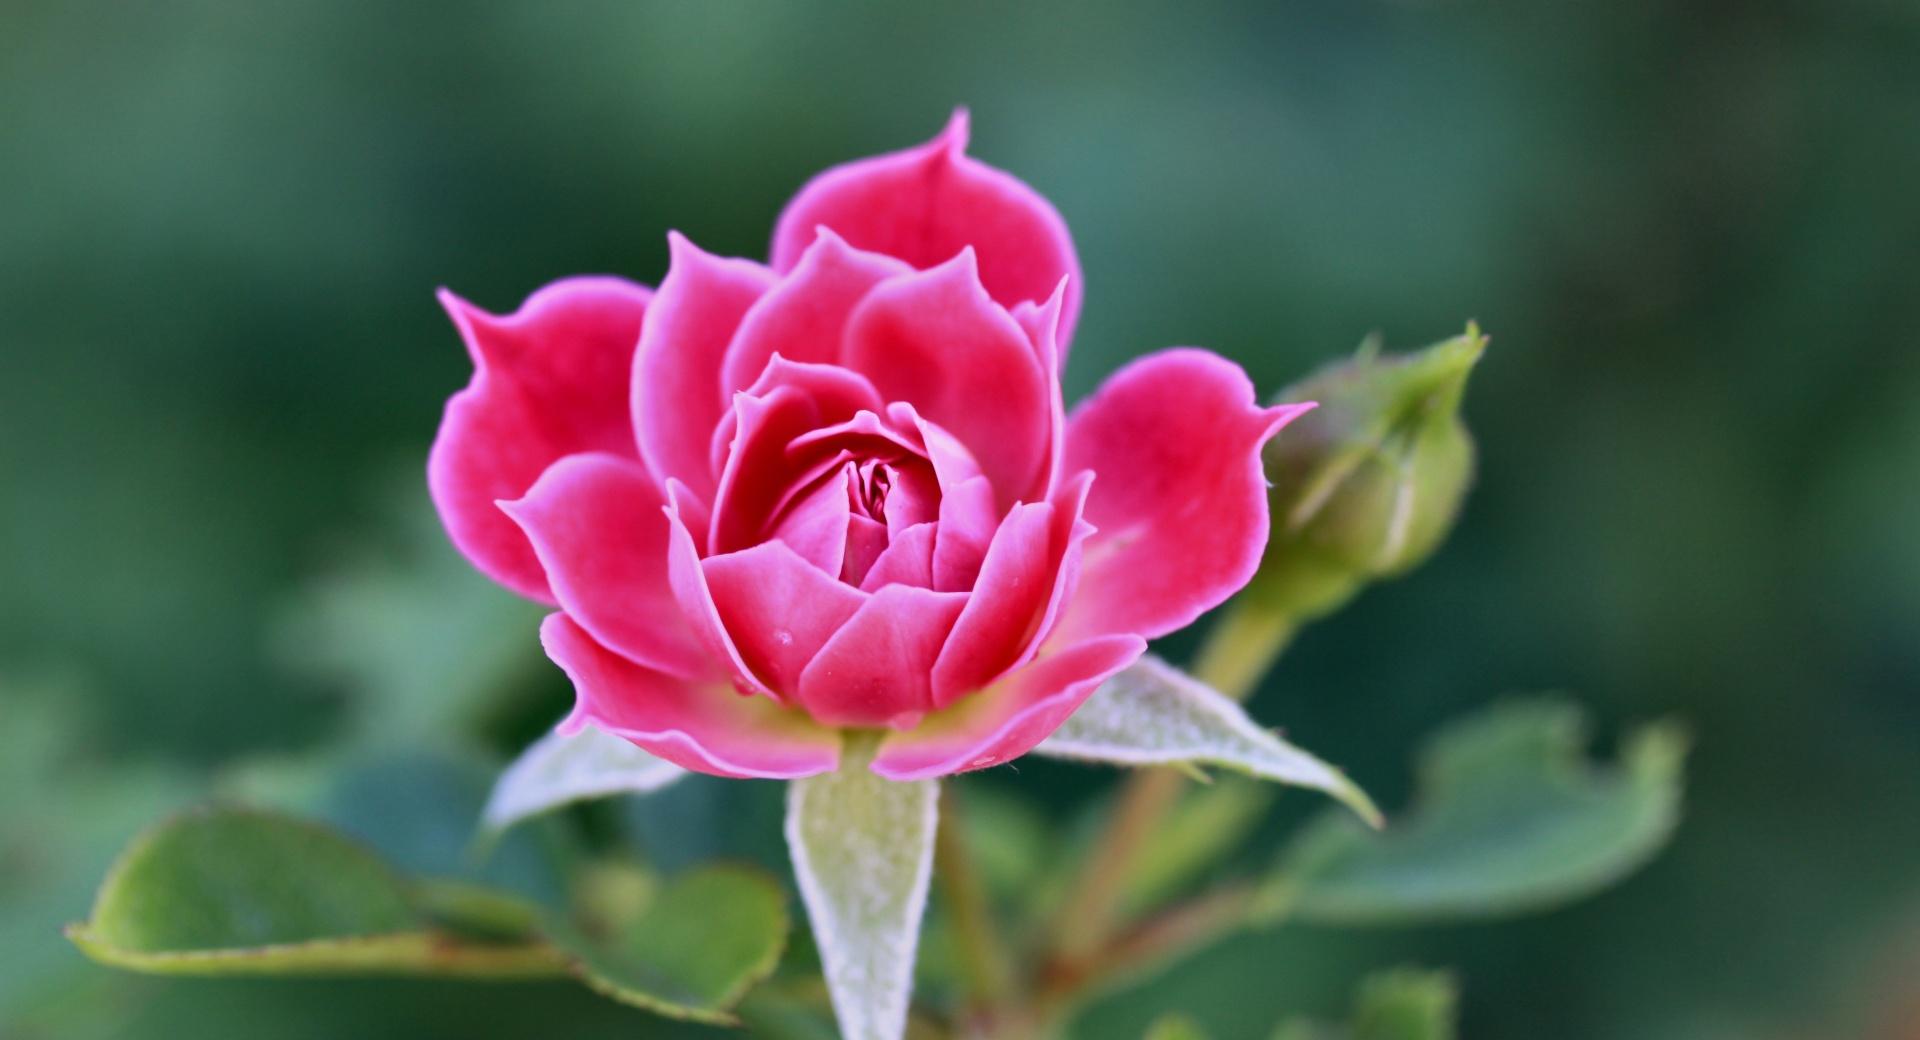 Beautiful Rose Petals at 1024 x 1024 iPad size wallpapers HD quality